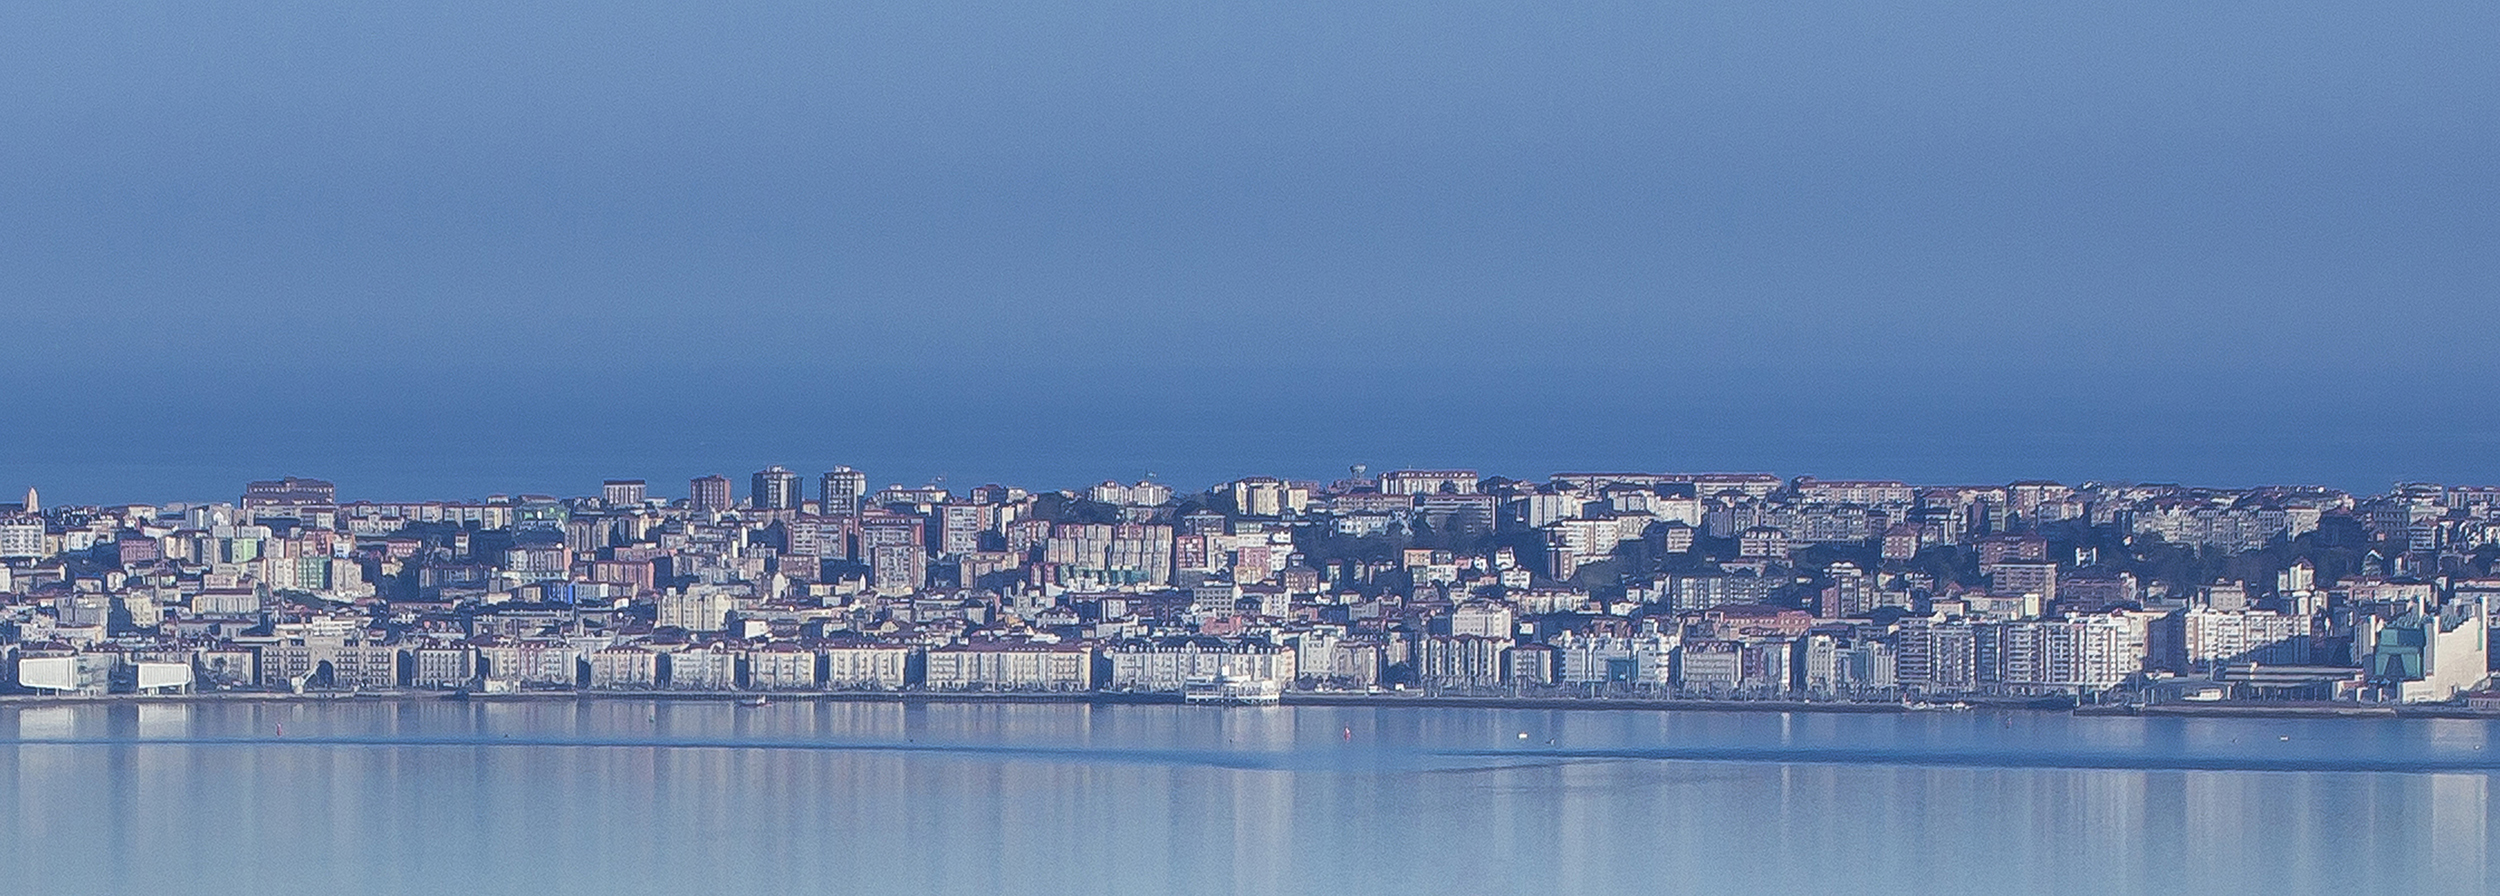 Santander city image